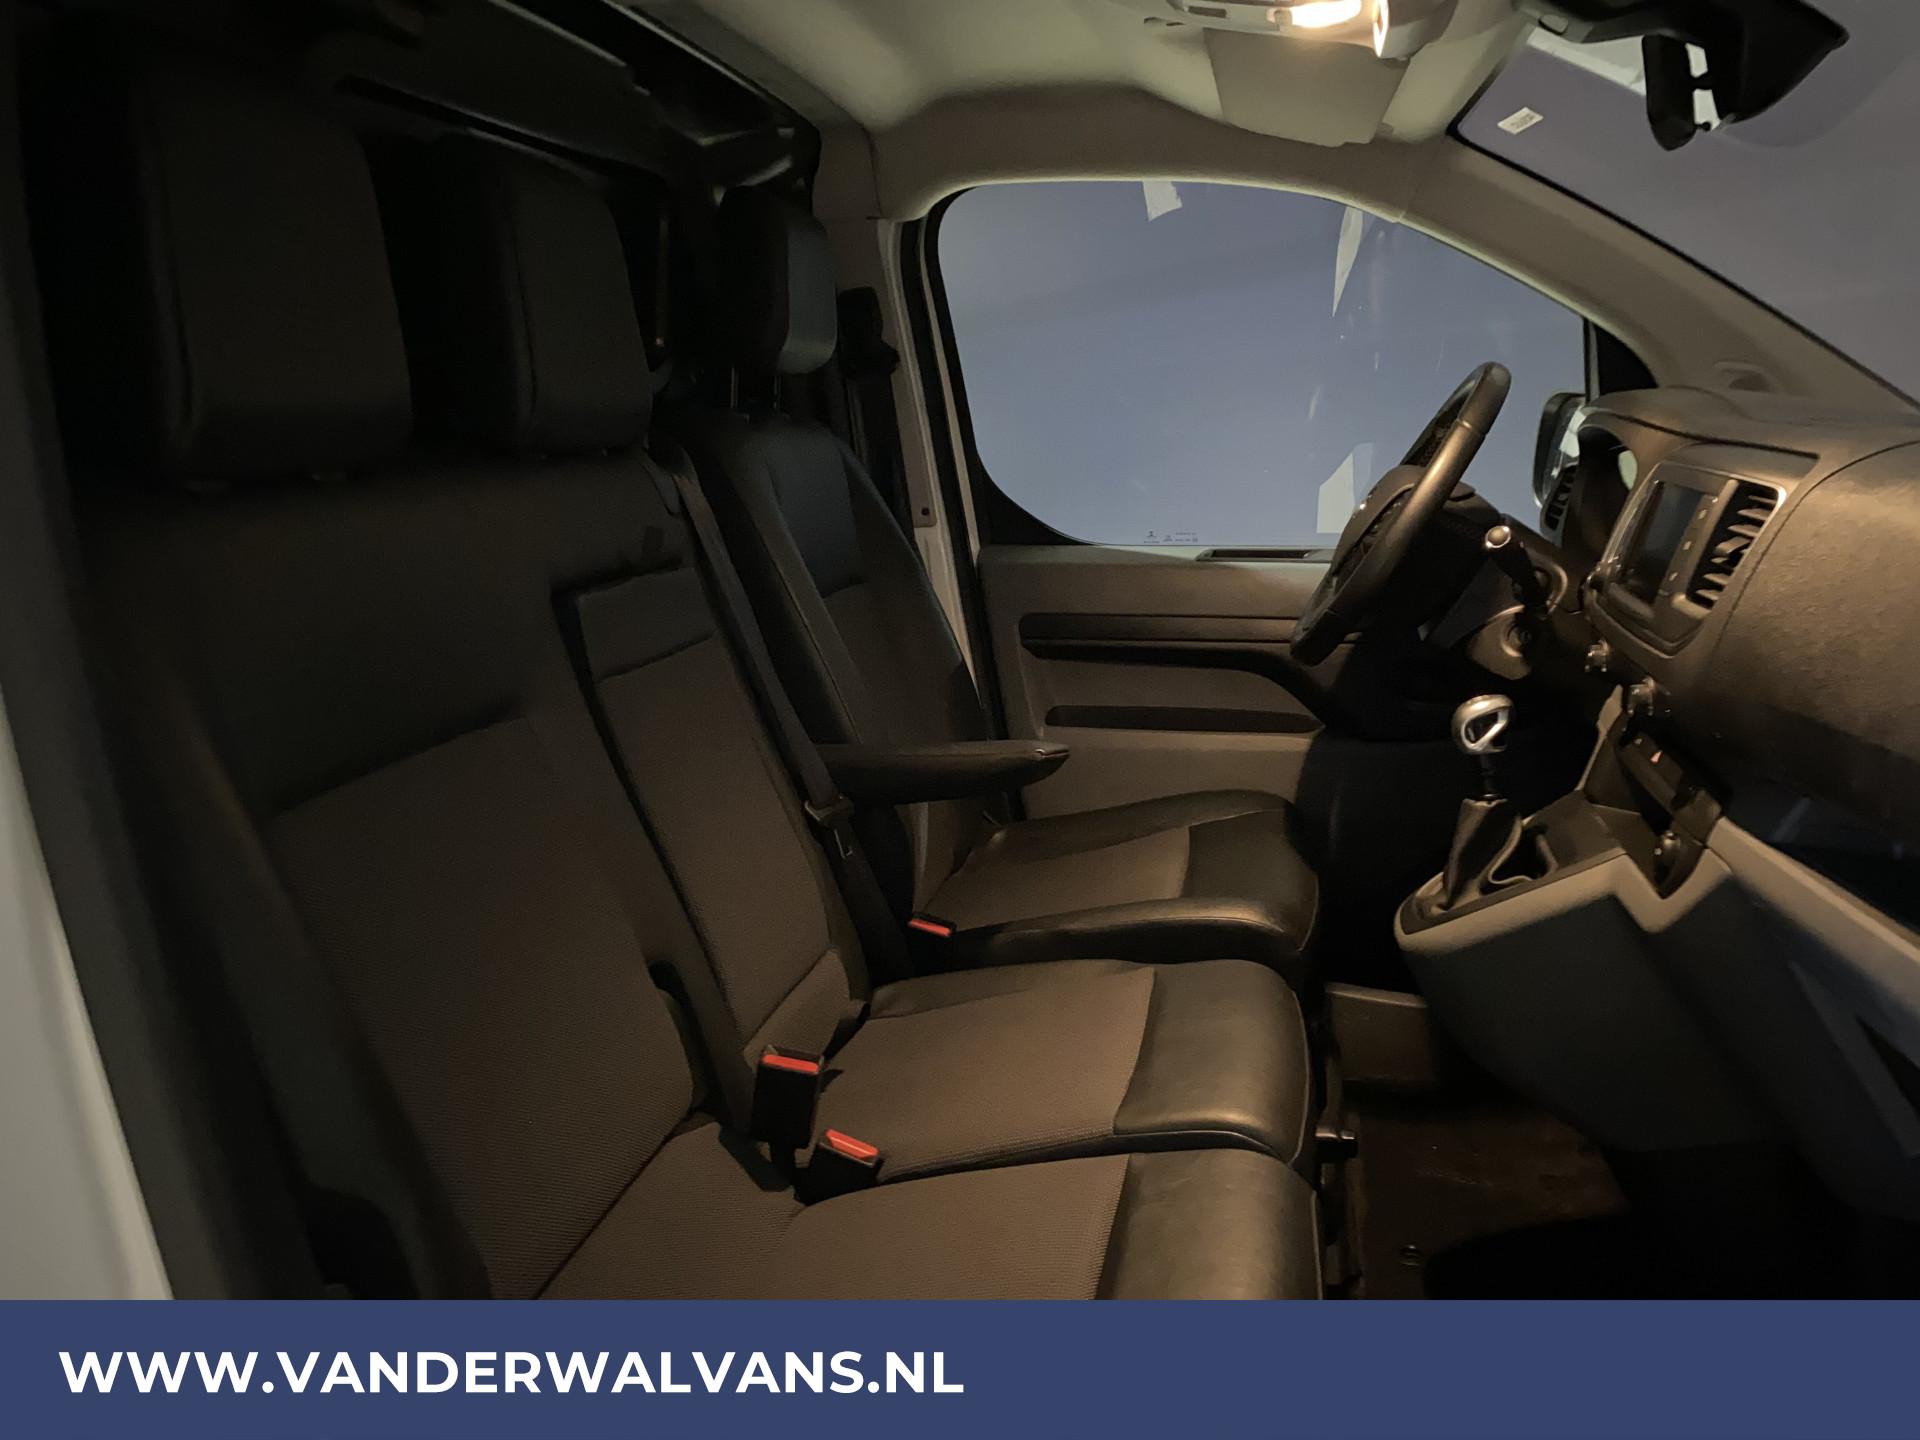 Foto 13 van Opel Vivaro 2.0 CDTI 120pk L2H1 Euro6 Airco | Bumpers in kleur | Navigatie | 2500kg trekhaak